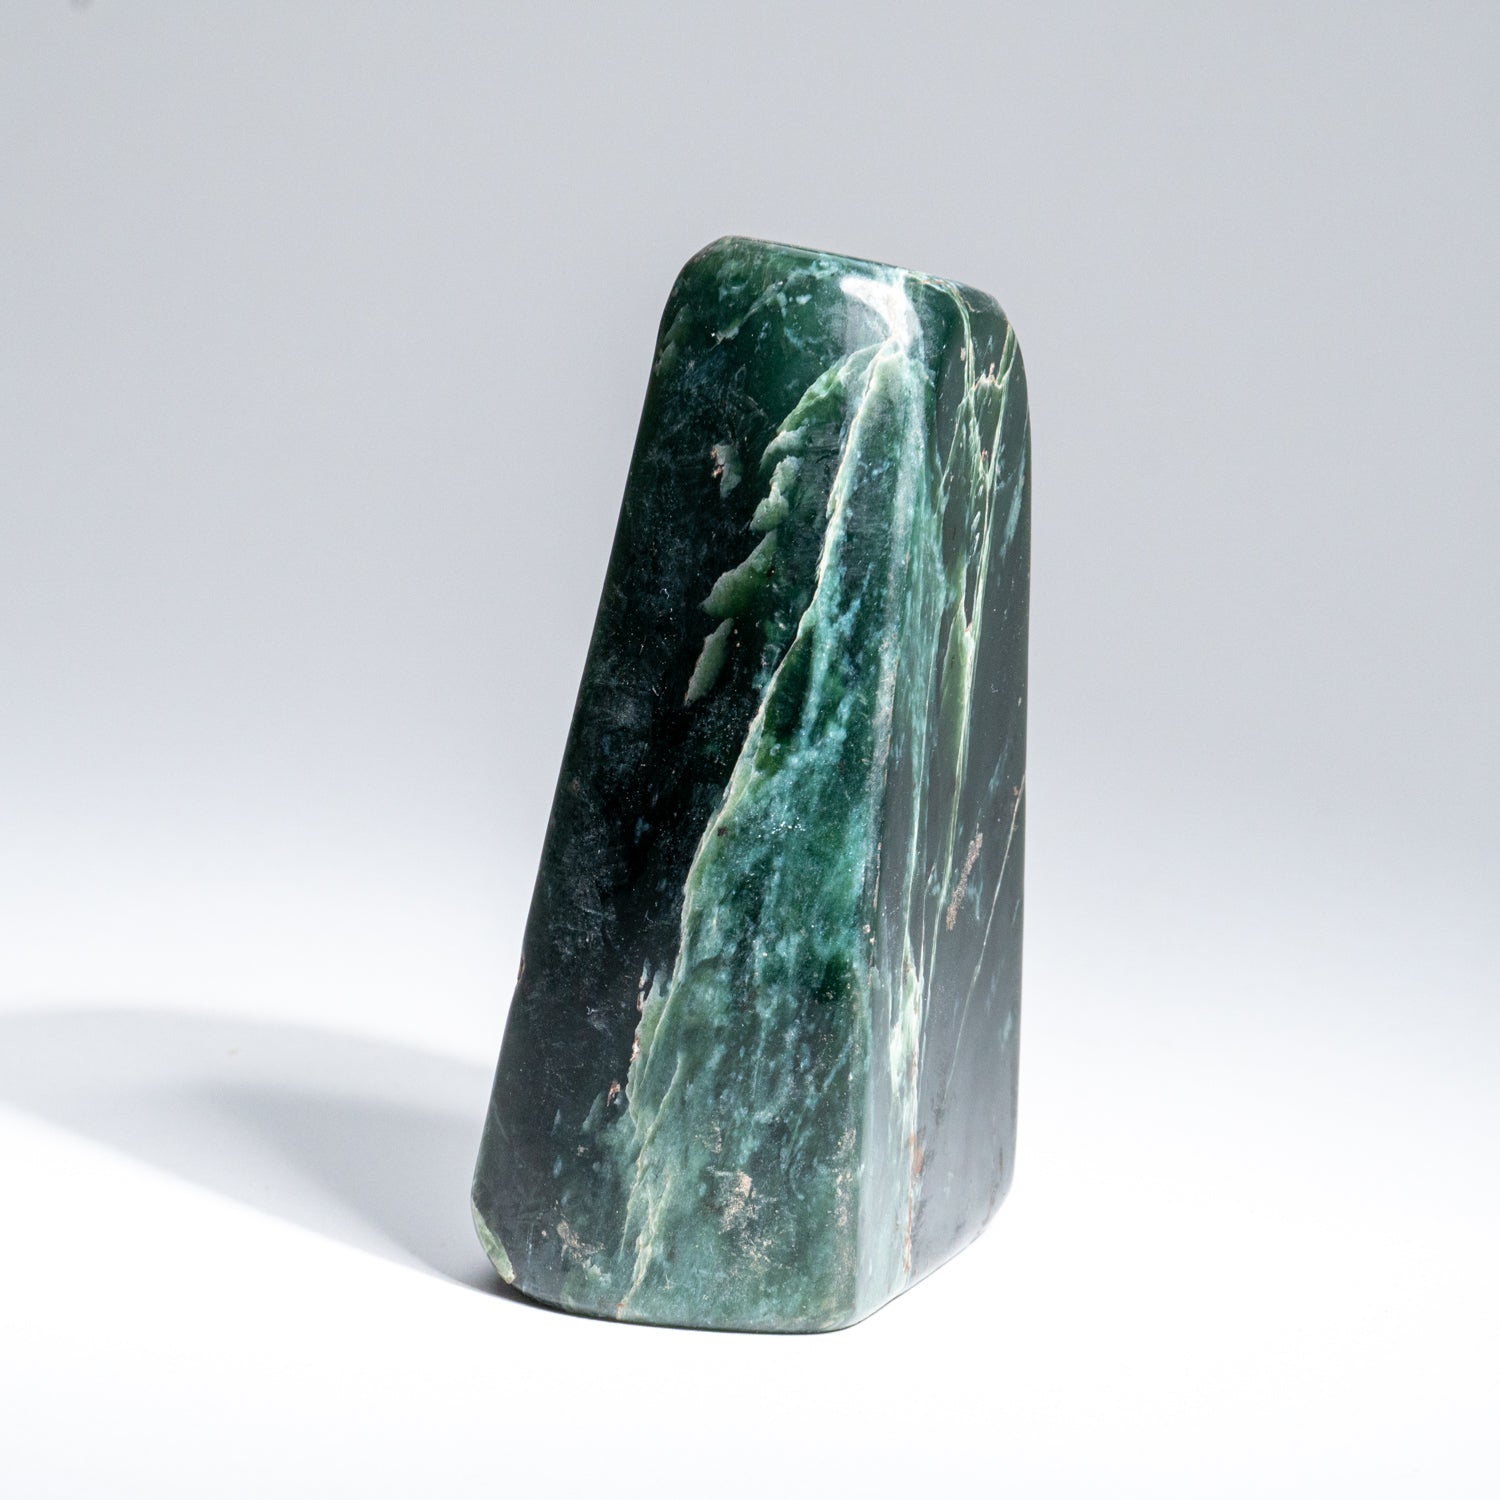 Polished Nephrite Jade Freeform from Pakistan (376.8 grams)